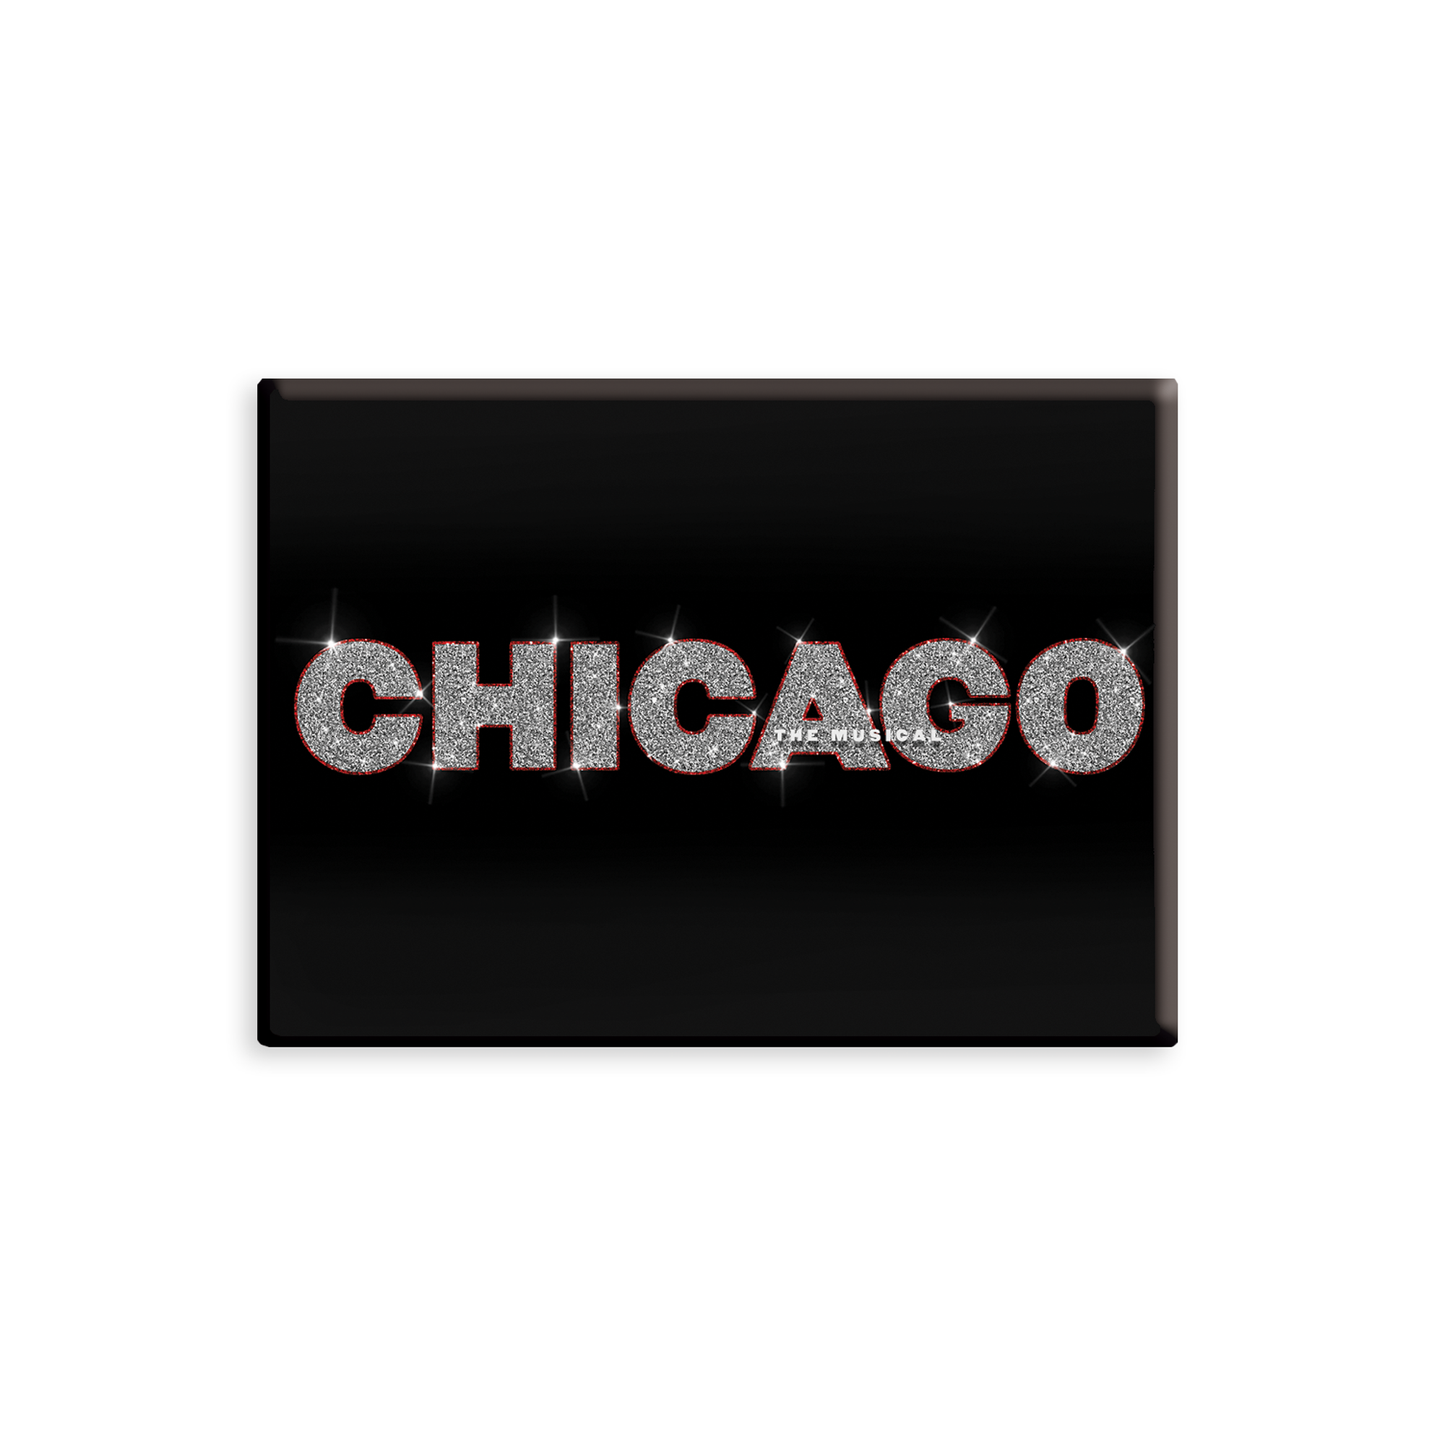 CHICAGO Magnet